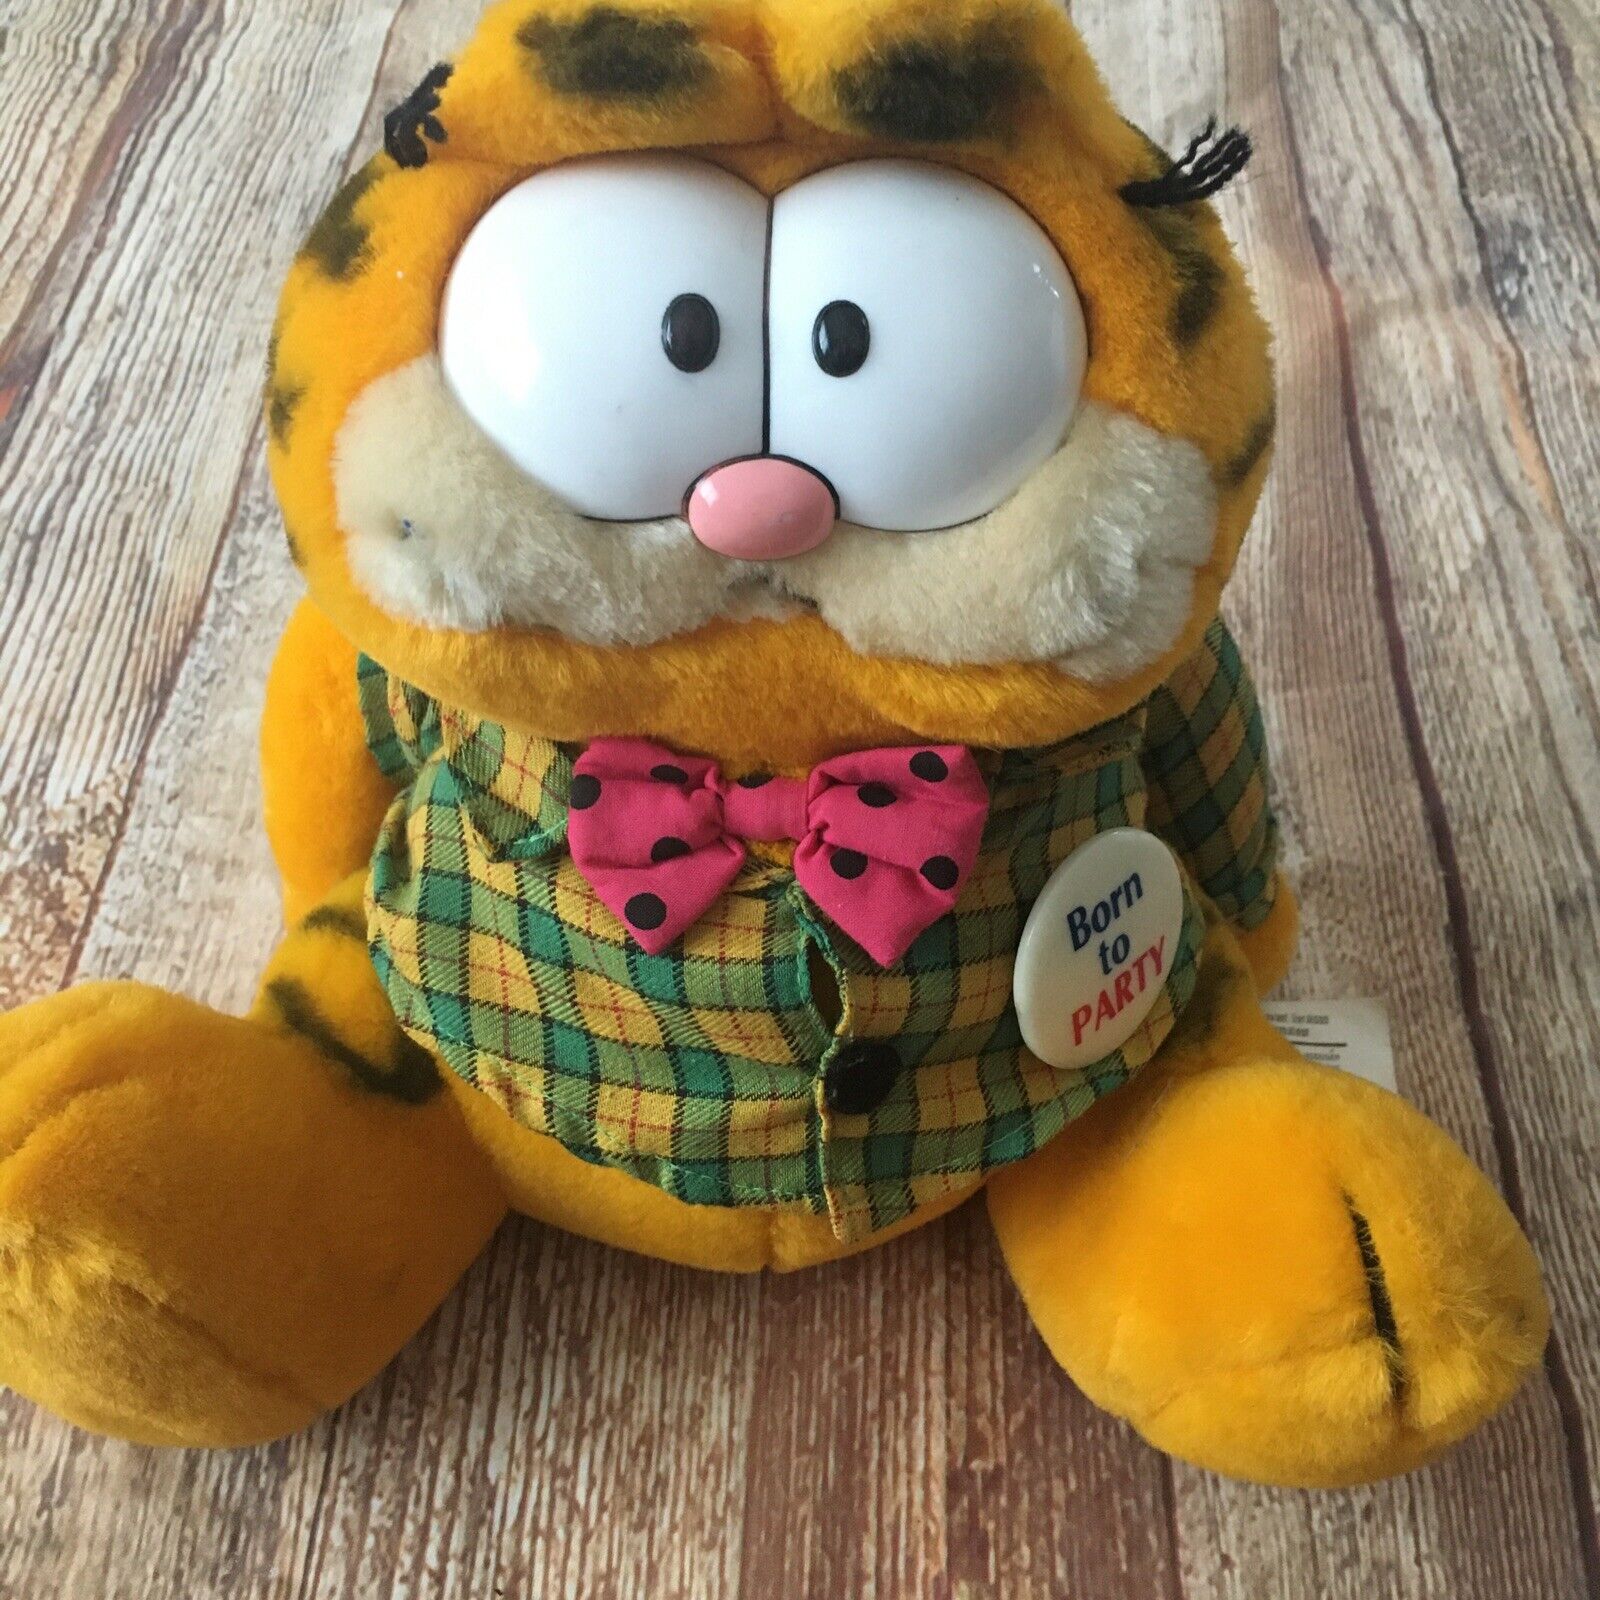 Dakin GARFIELD Born to Party Plaid Shirt 1978 1981 Plush Orange Tabby Cat Button